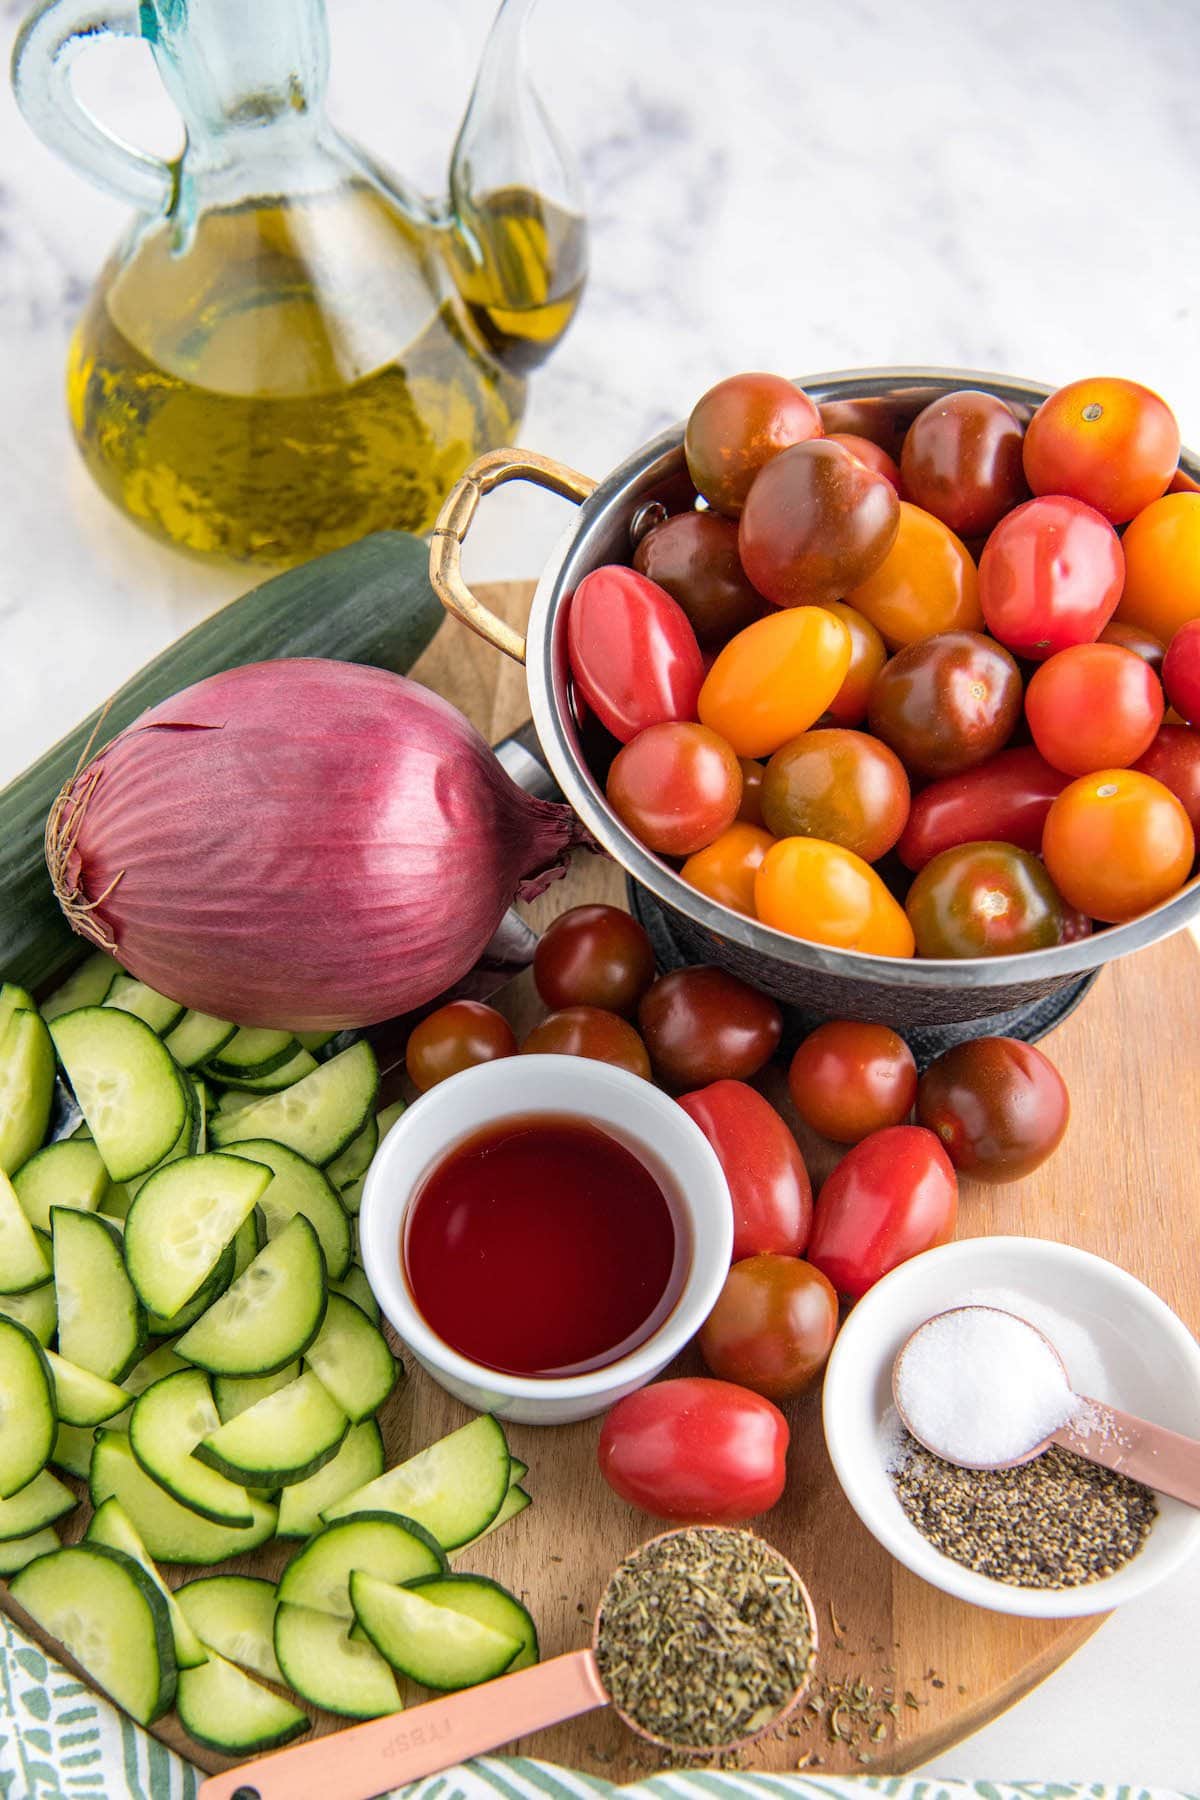 Easy Cucumber Tomato Salad Recipe In 10 Minutes